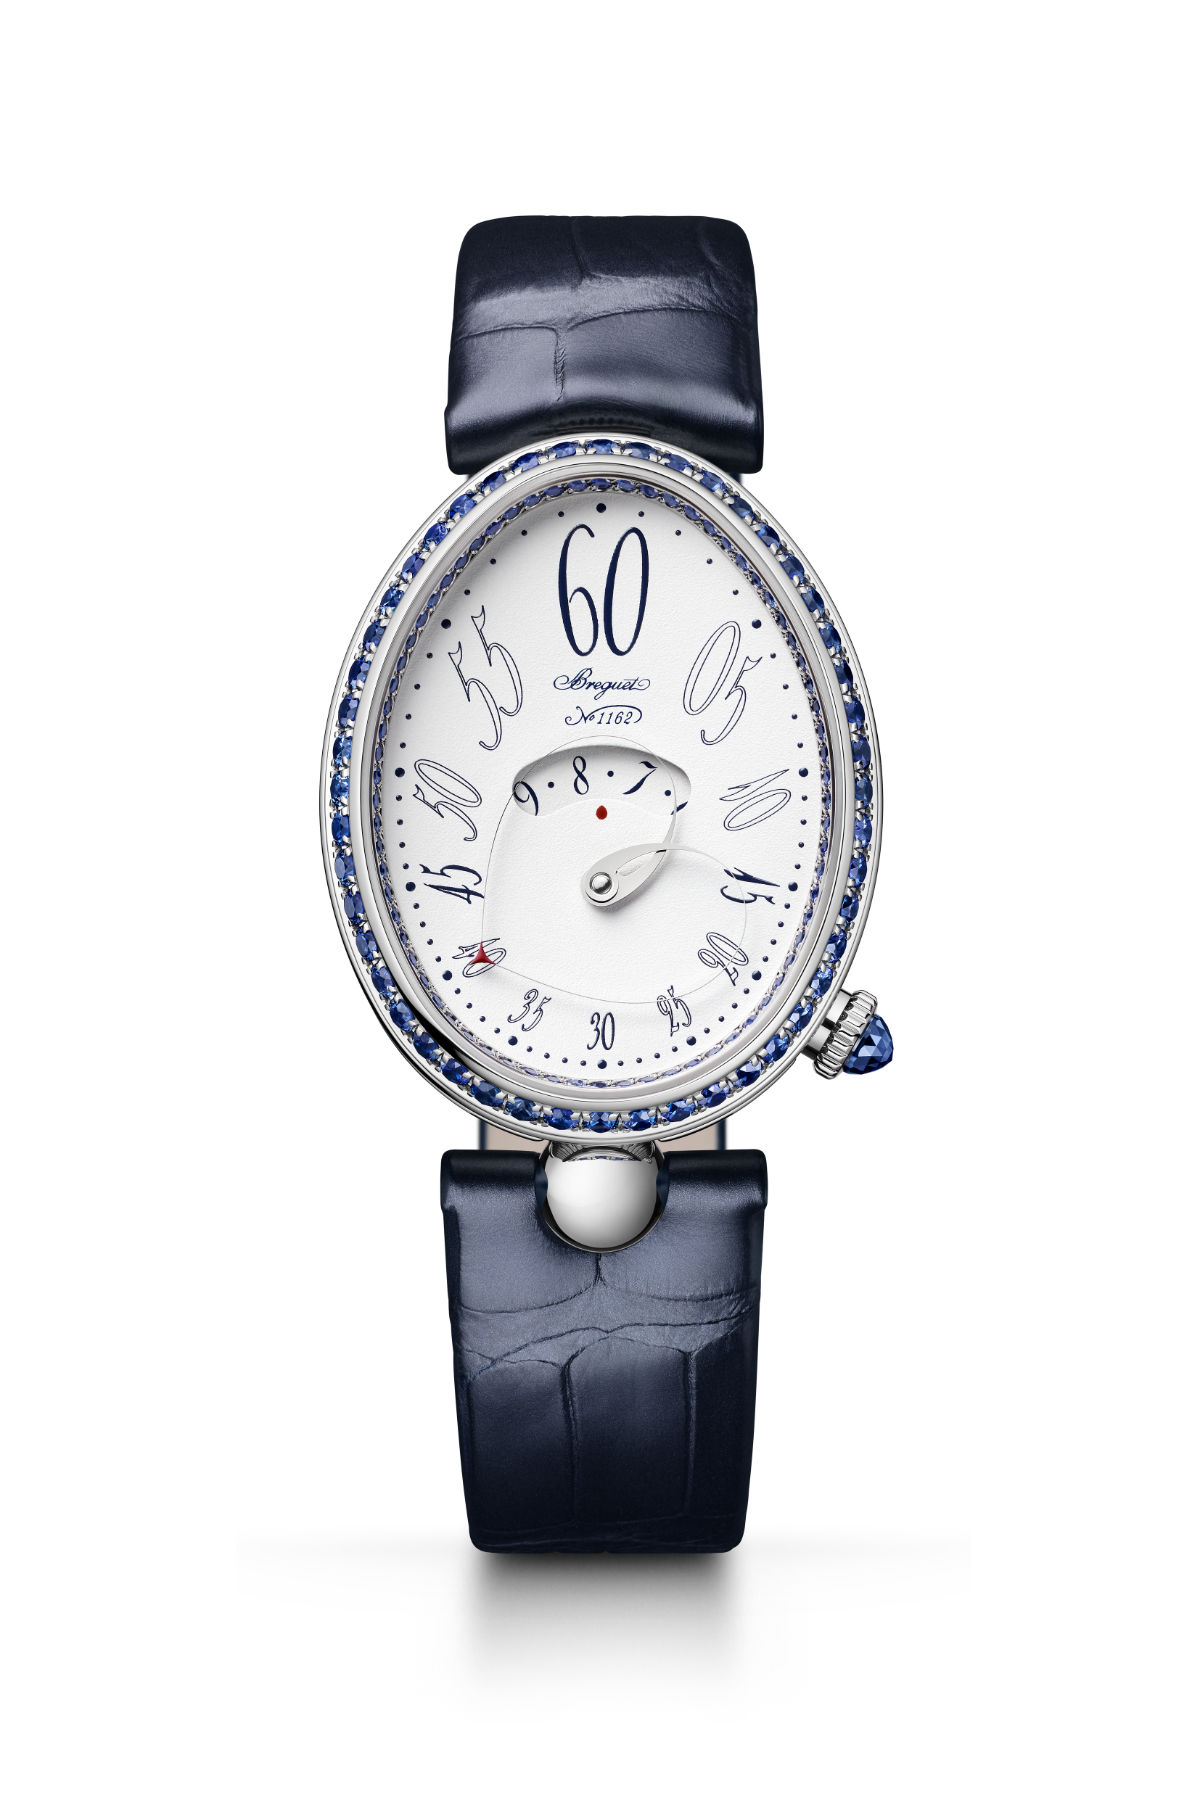 Breguet's Two New Timepieces: Reine De Naples 9835 And 9838